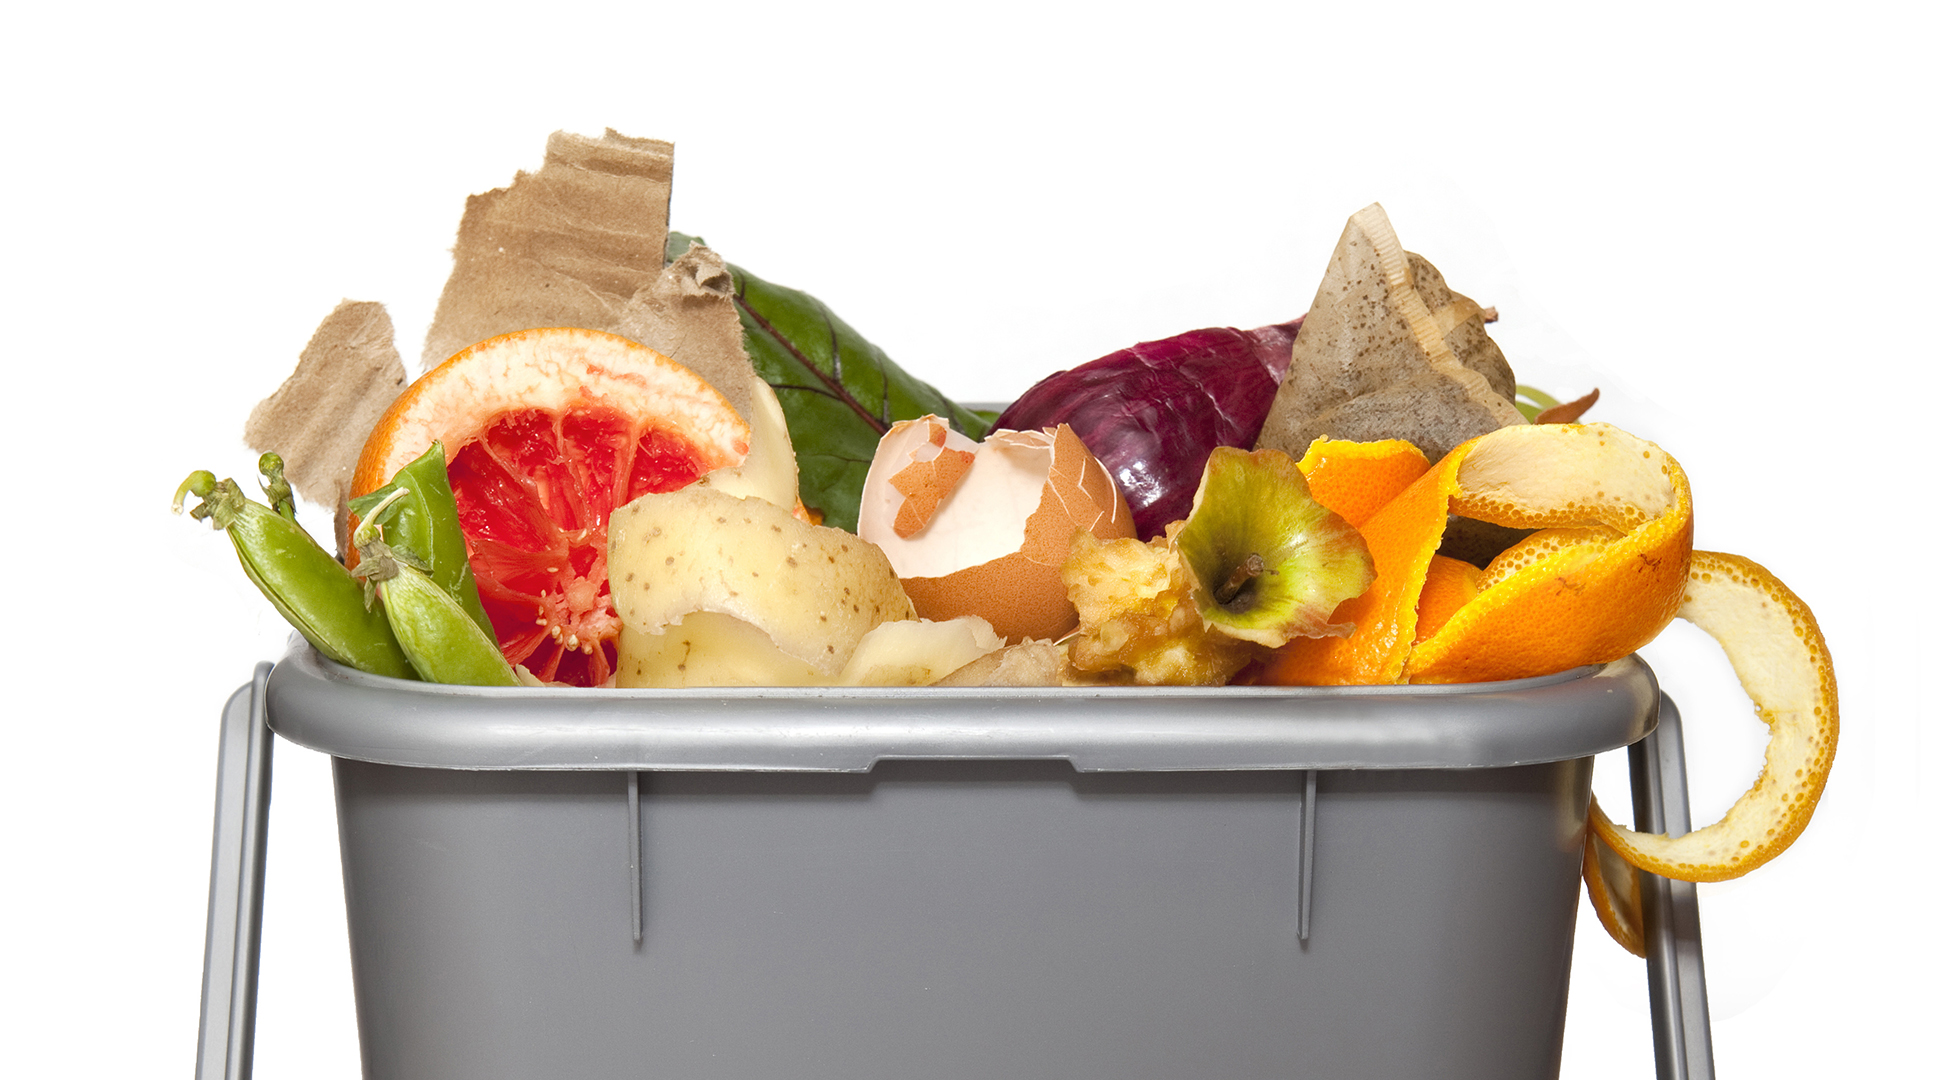 Curbing food waste